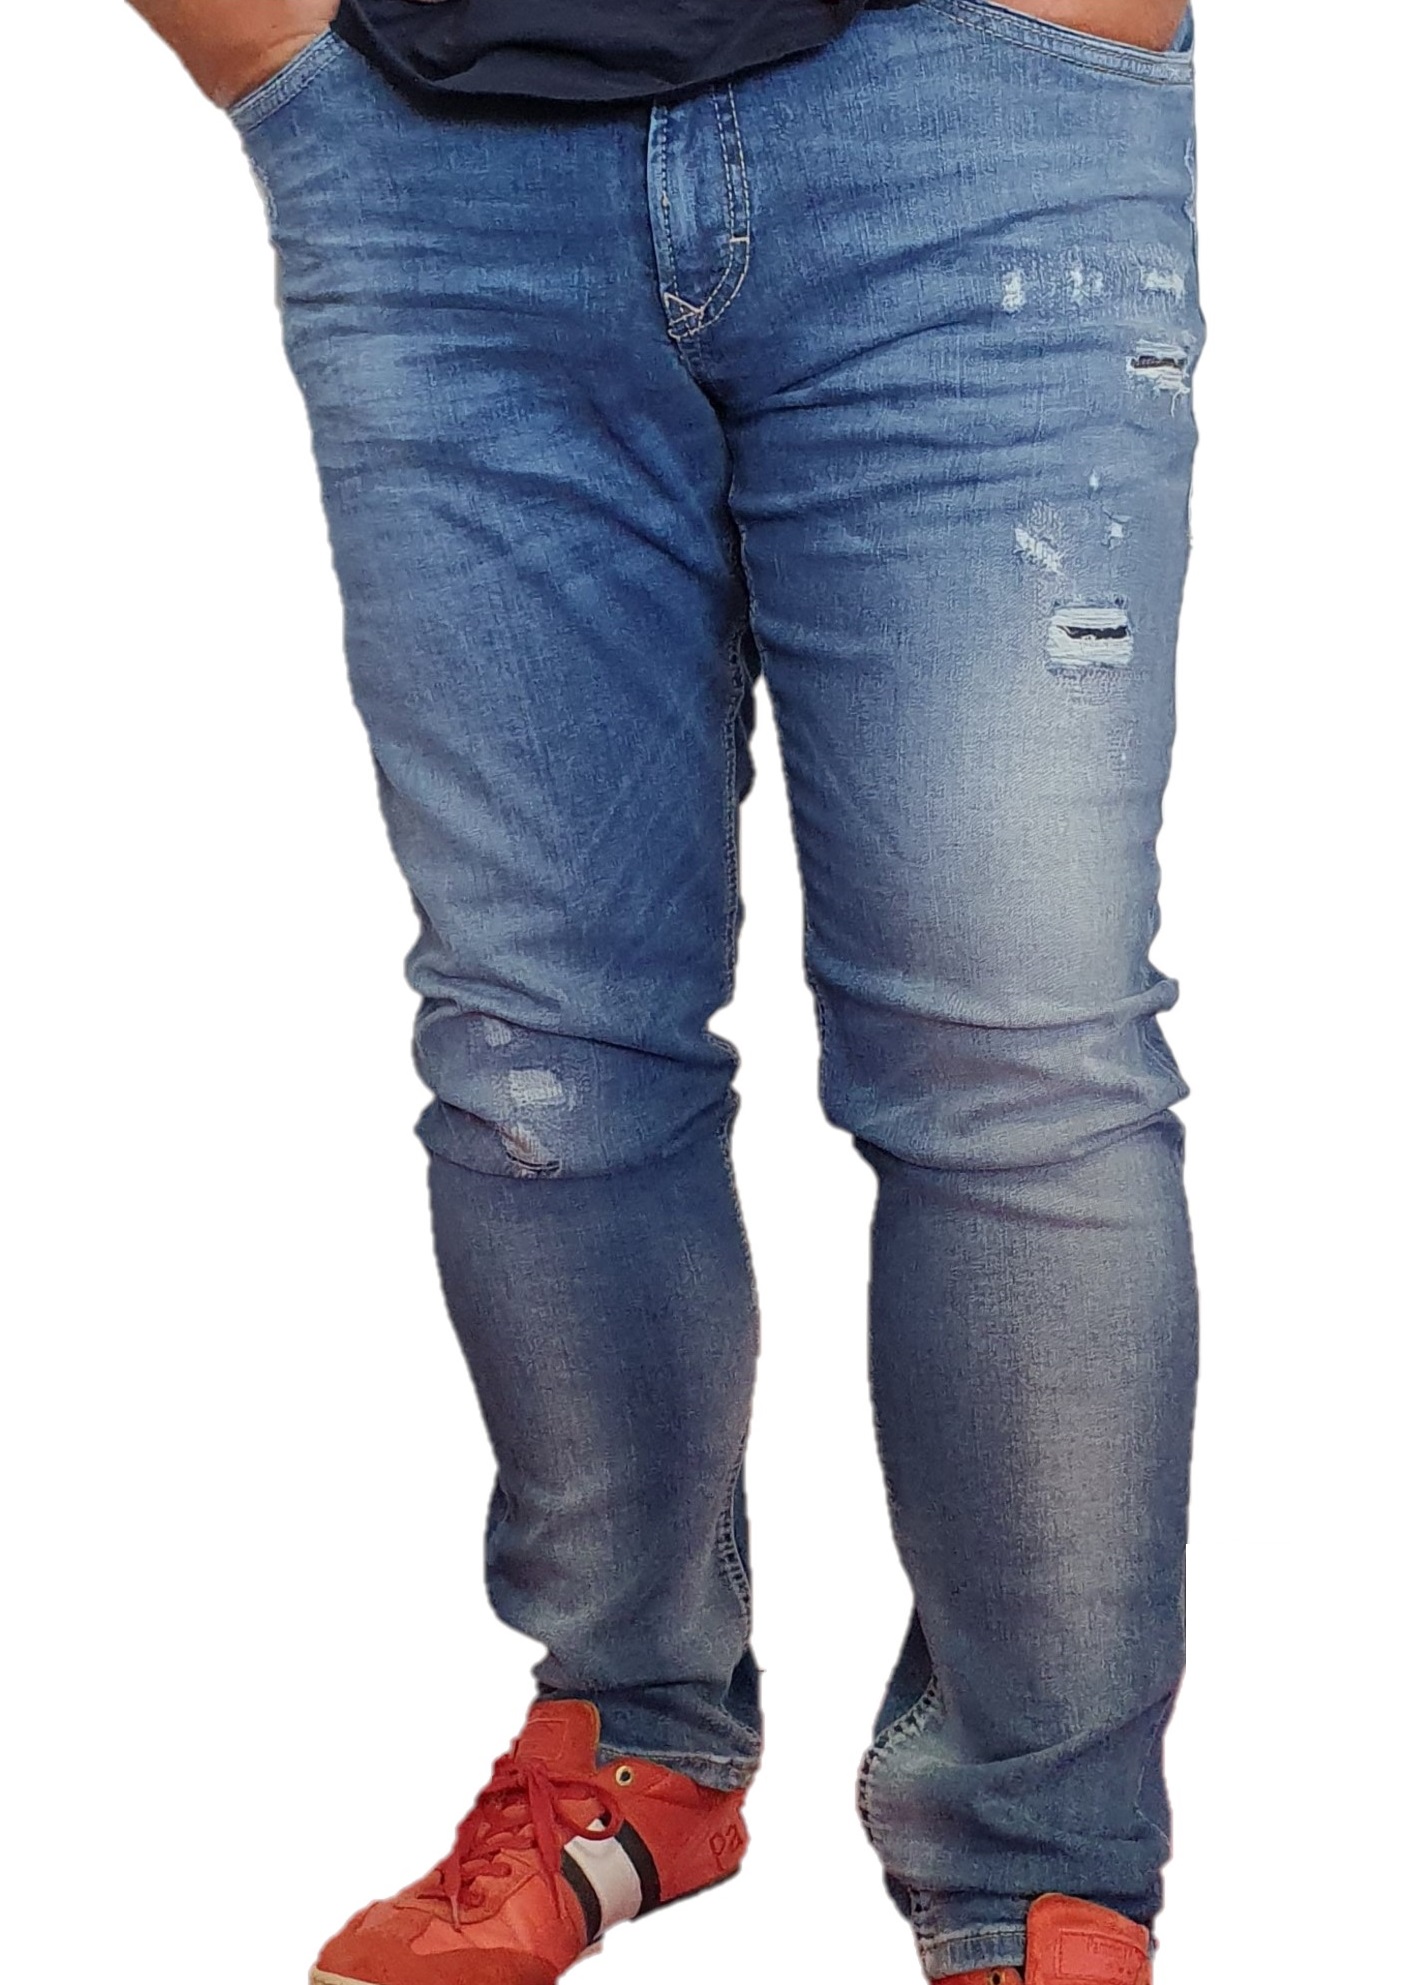 MAC Herren-Jeans, Arne Pipe, Drivers kernige | authentische Jeans, 5-Pocket GioMilano Jeans